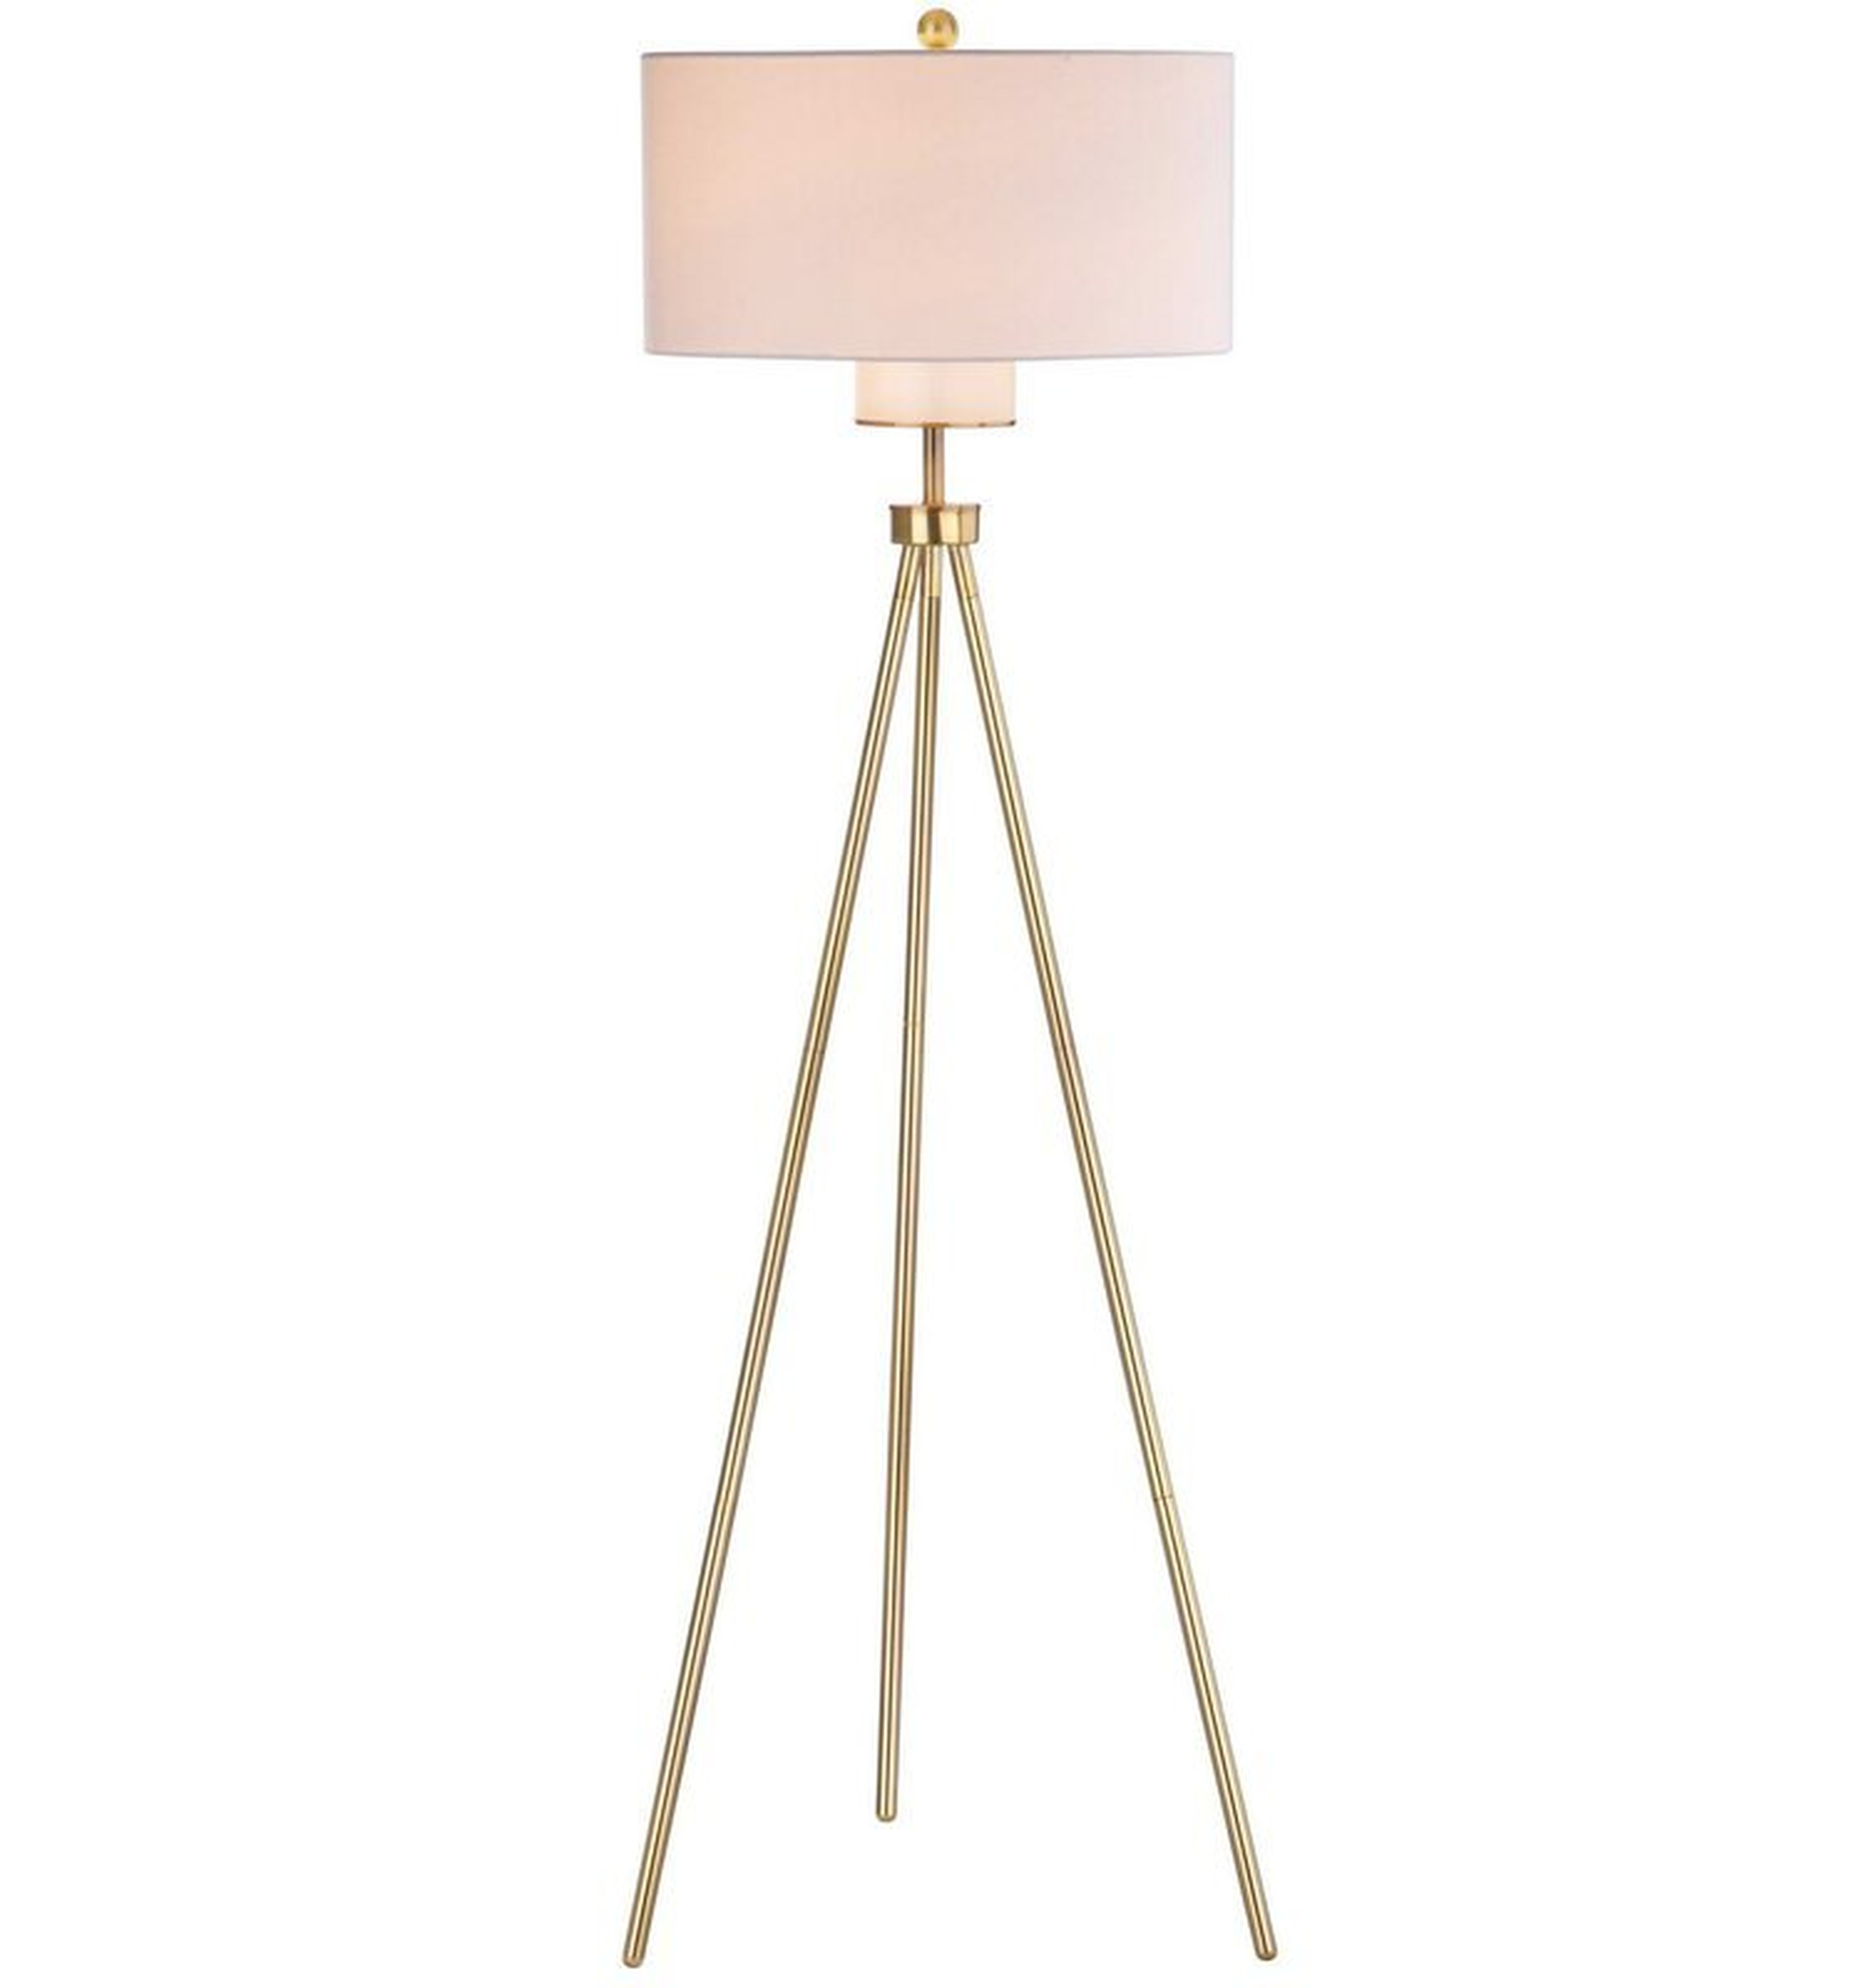 Floretta 66" Tripod Floor Lamp, Brass - Wayfair